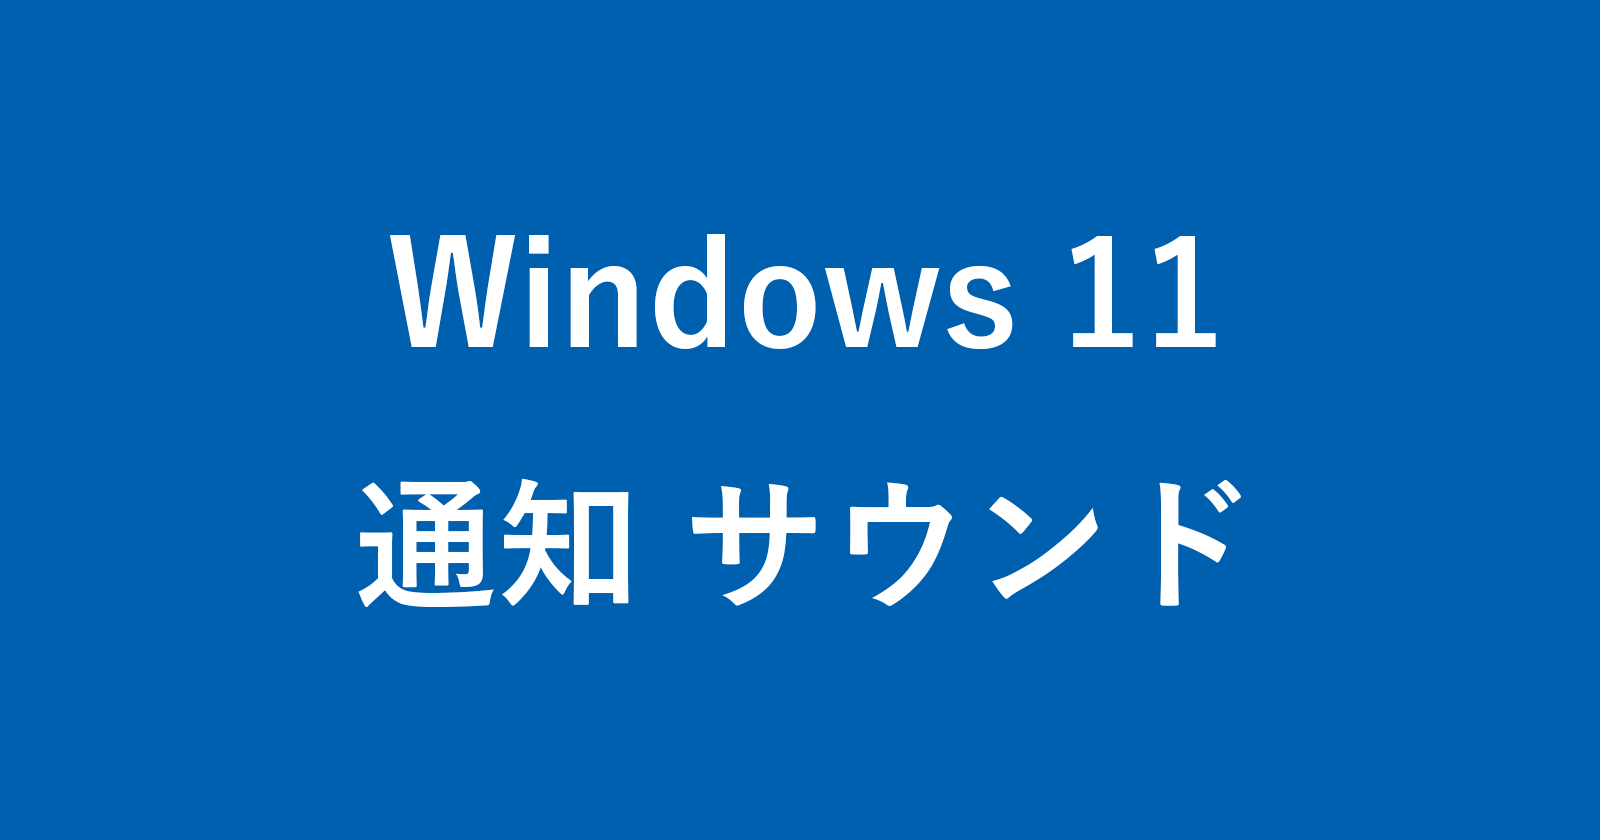 windows 11 notification sound